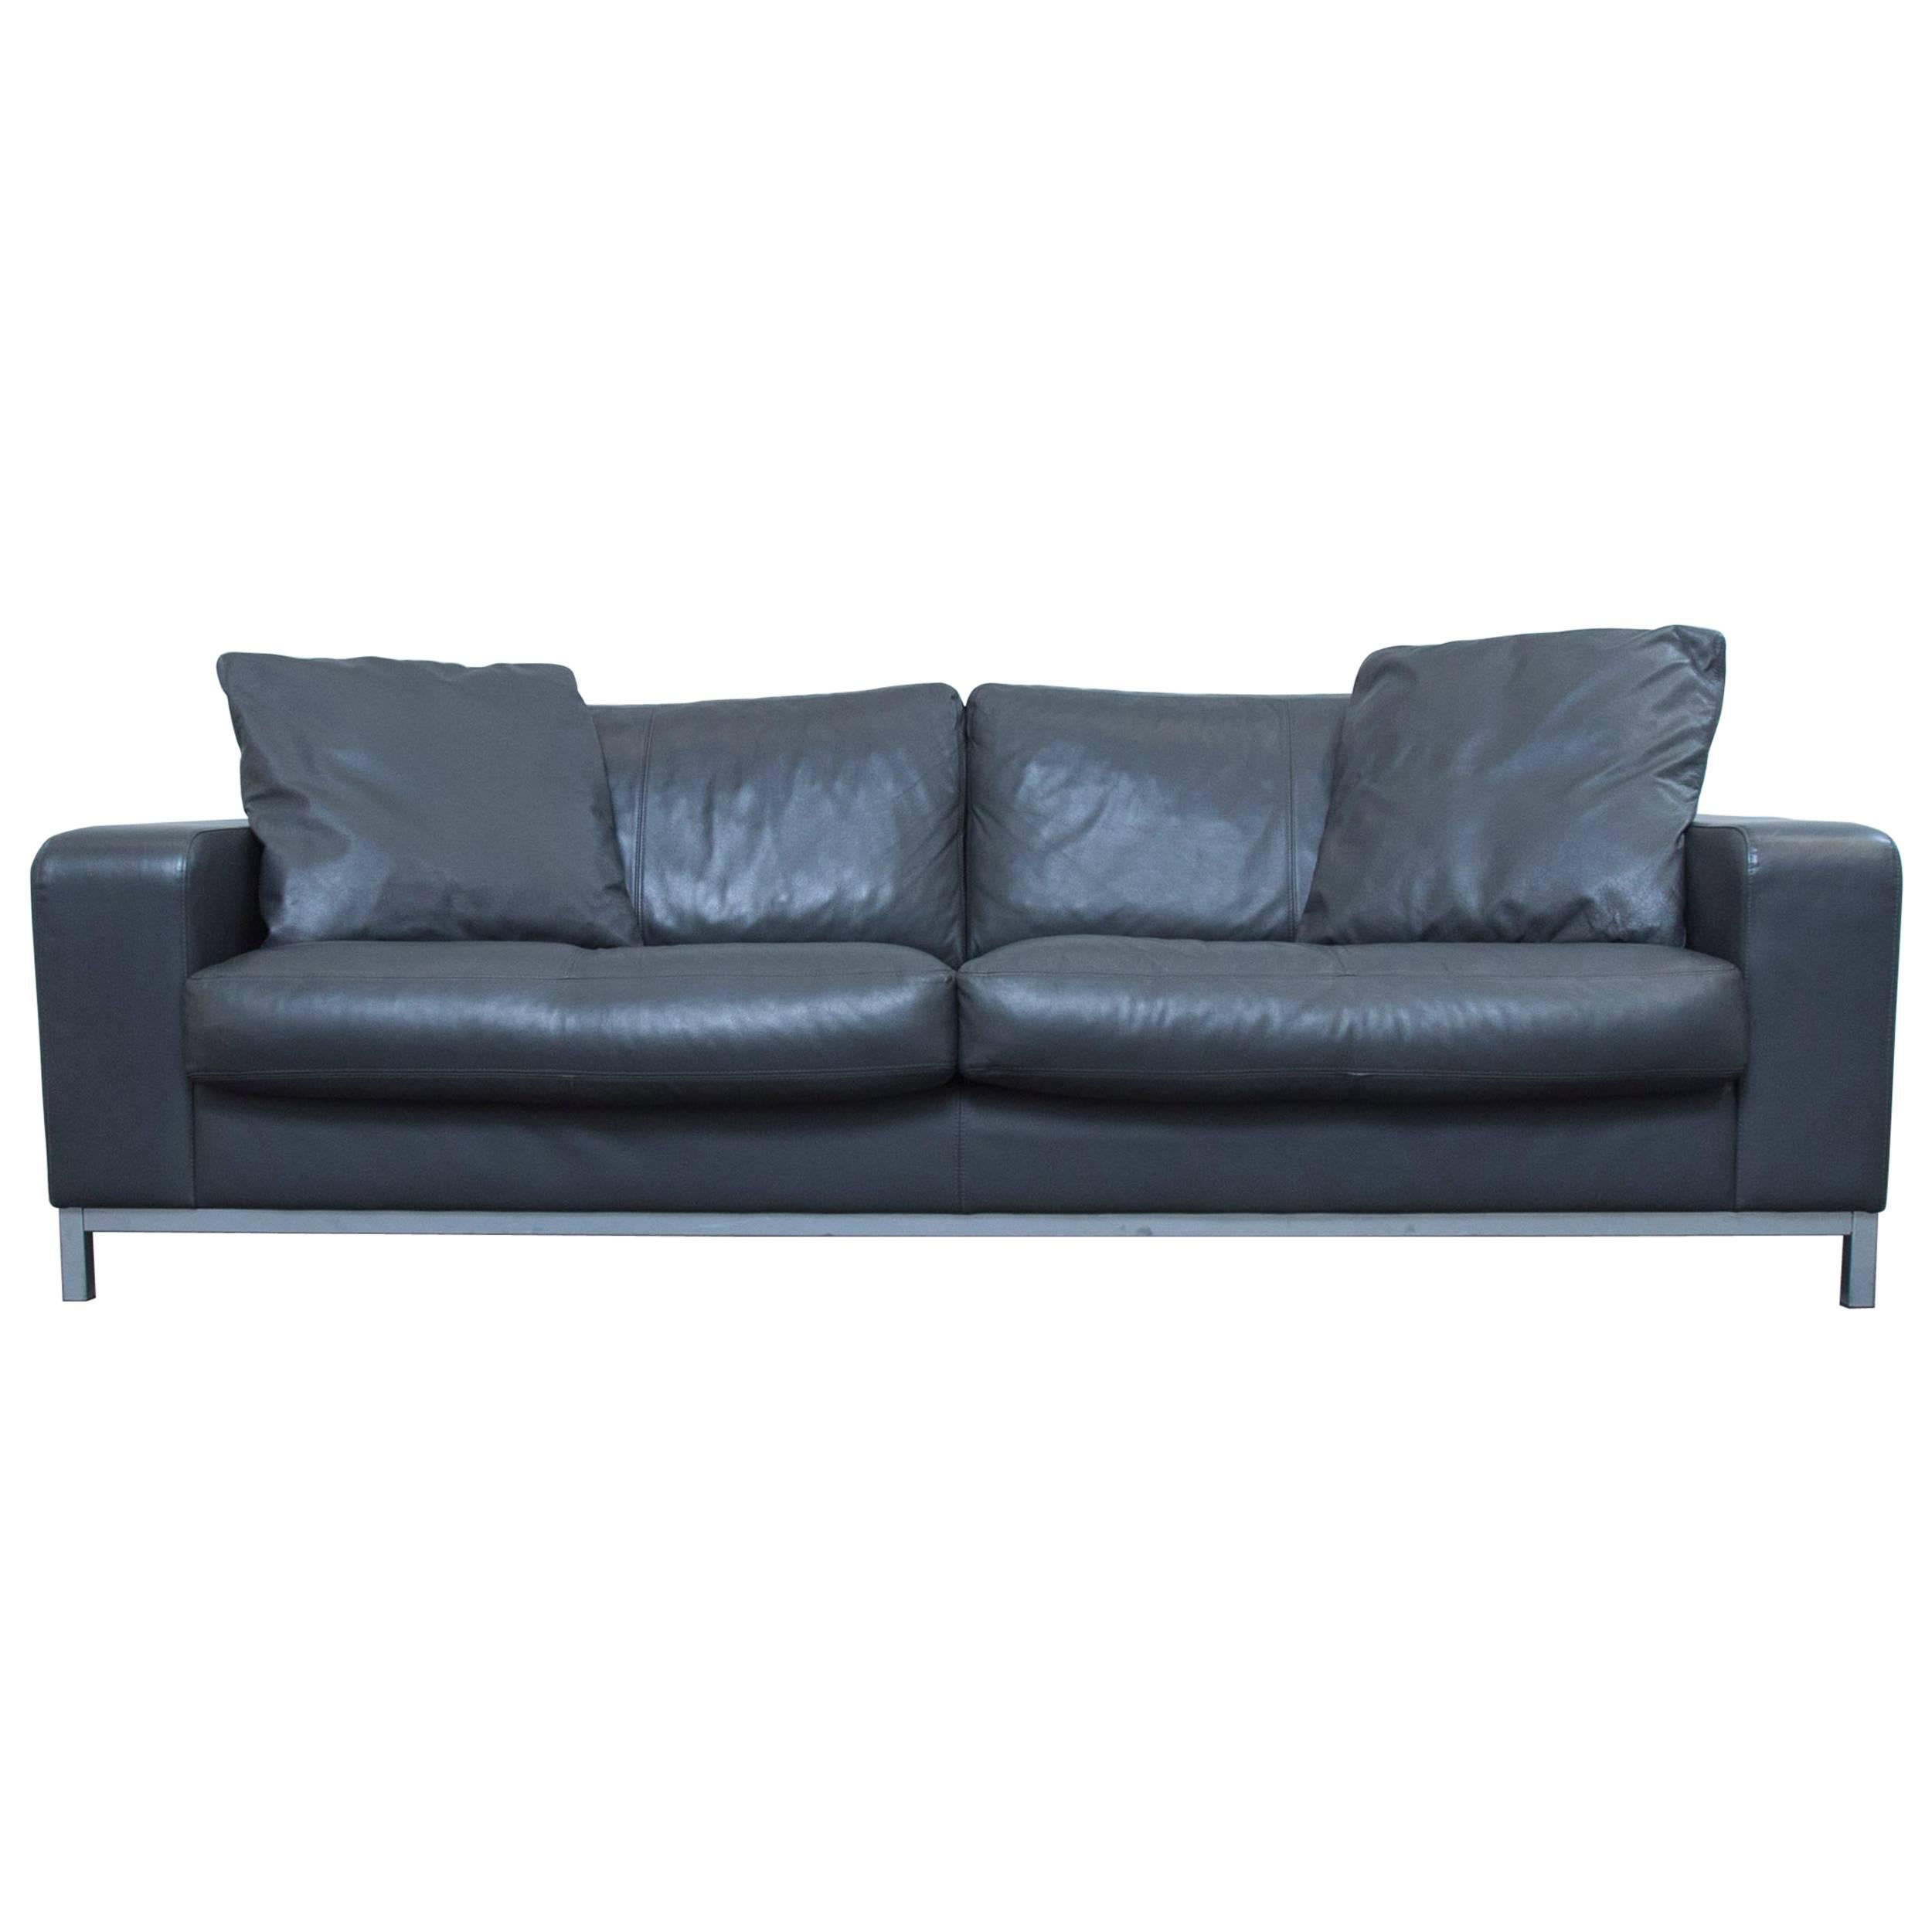 Machalke Designer Sofa in Grey Leather Three-Seat Couch, Modern For Sale